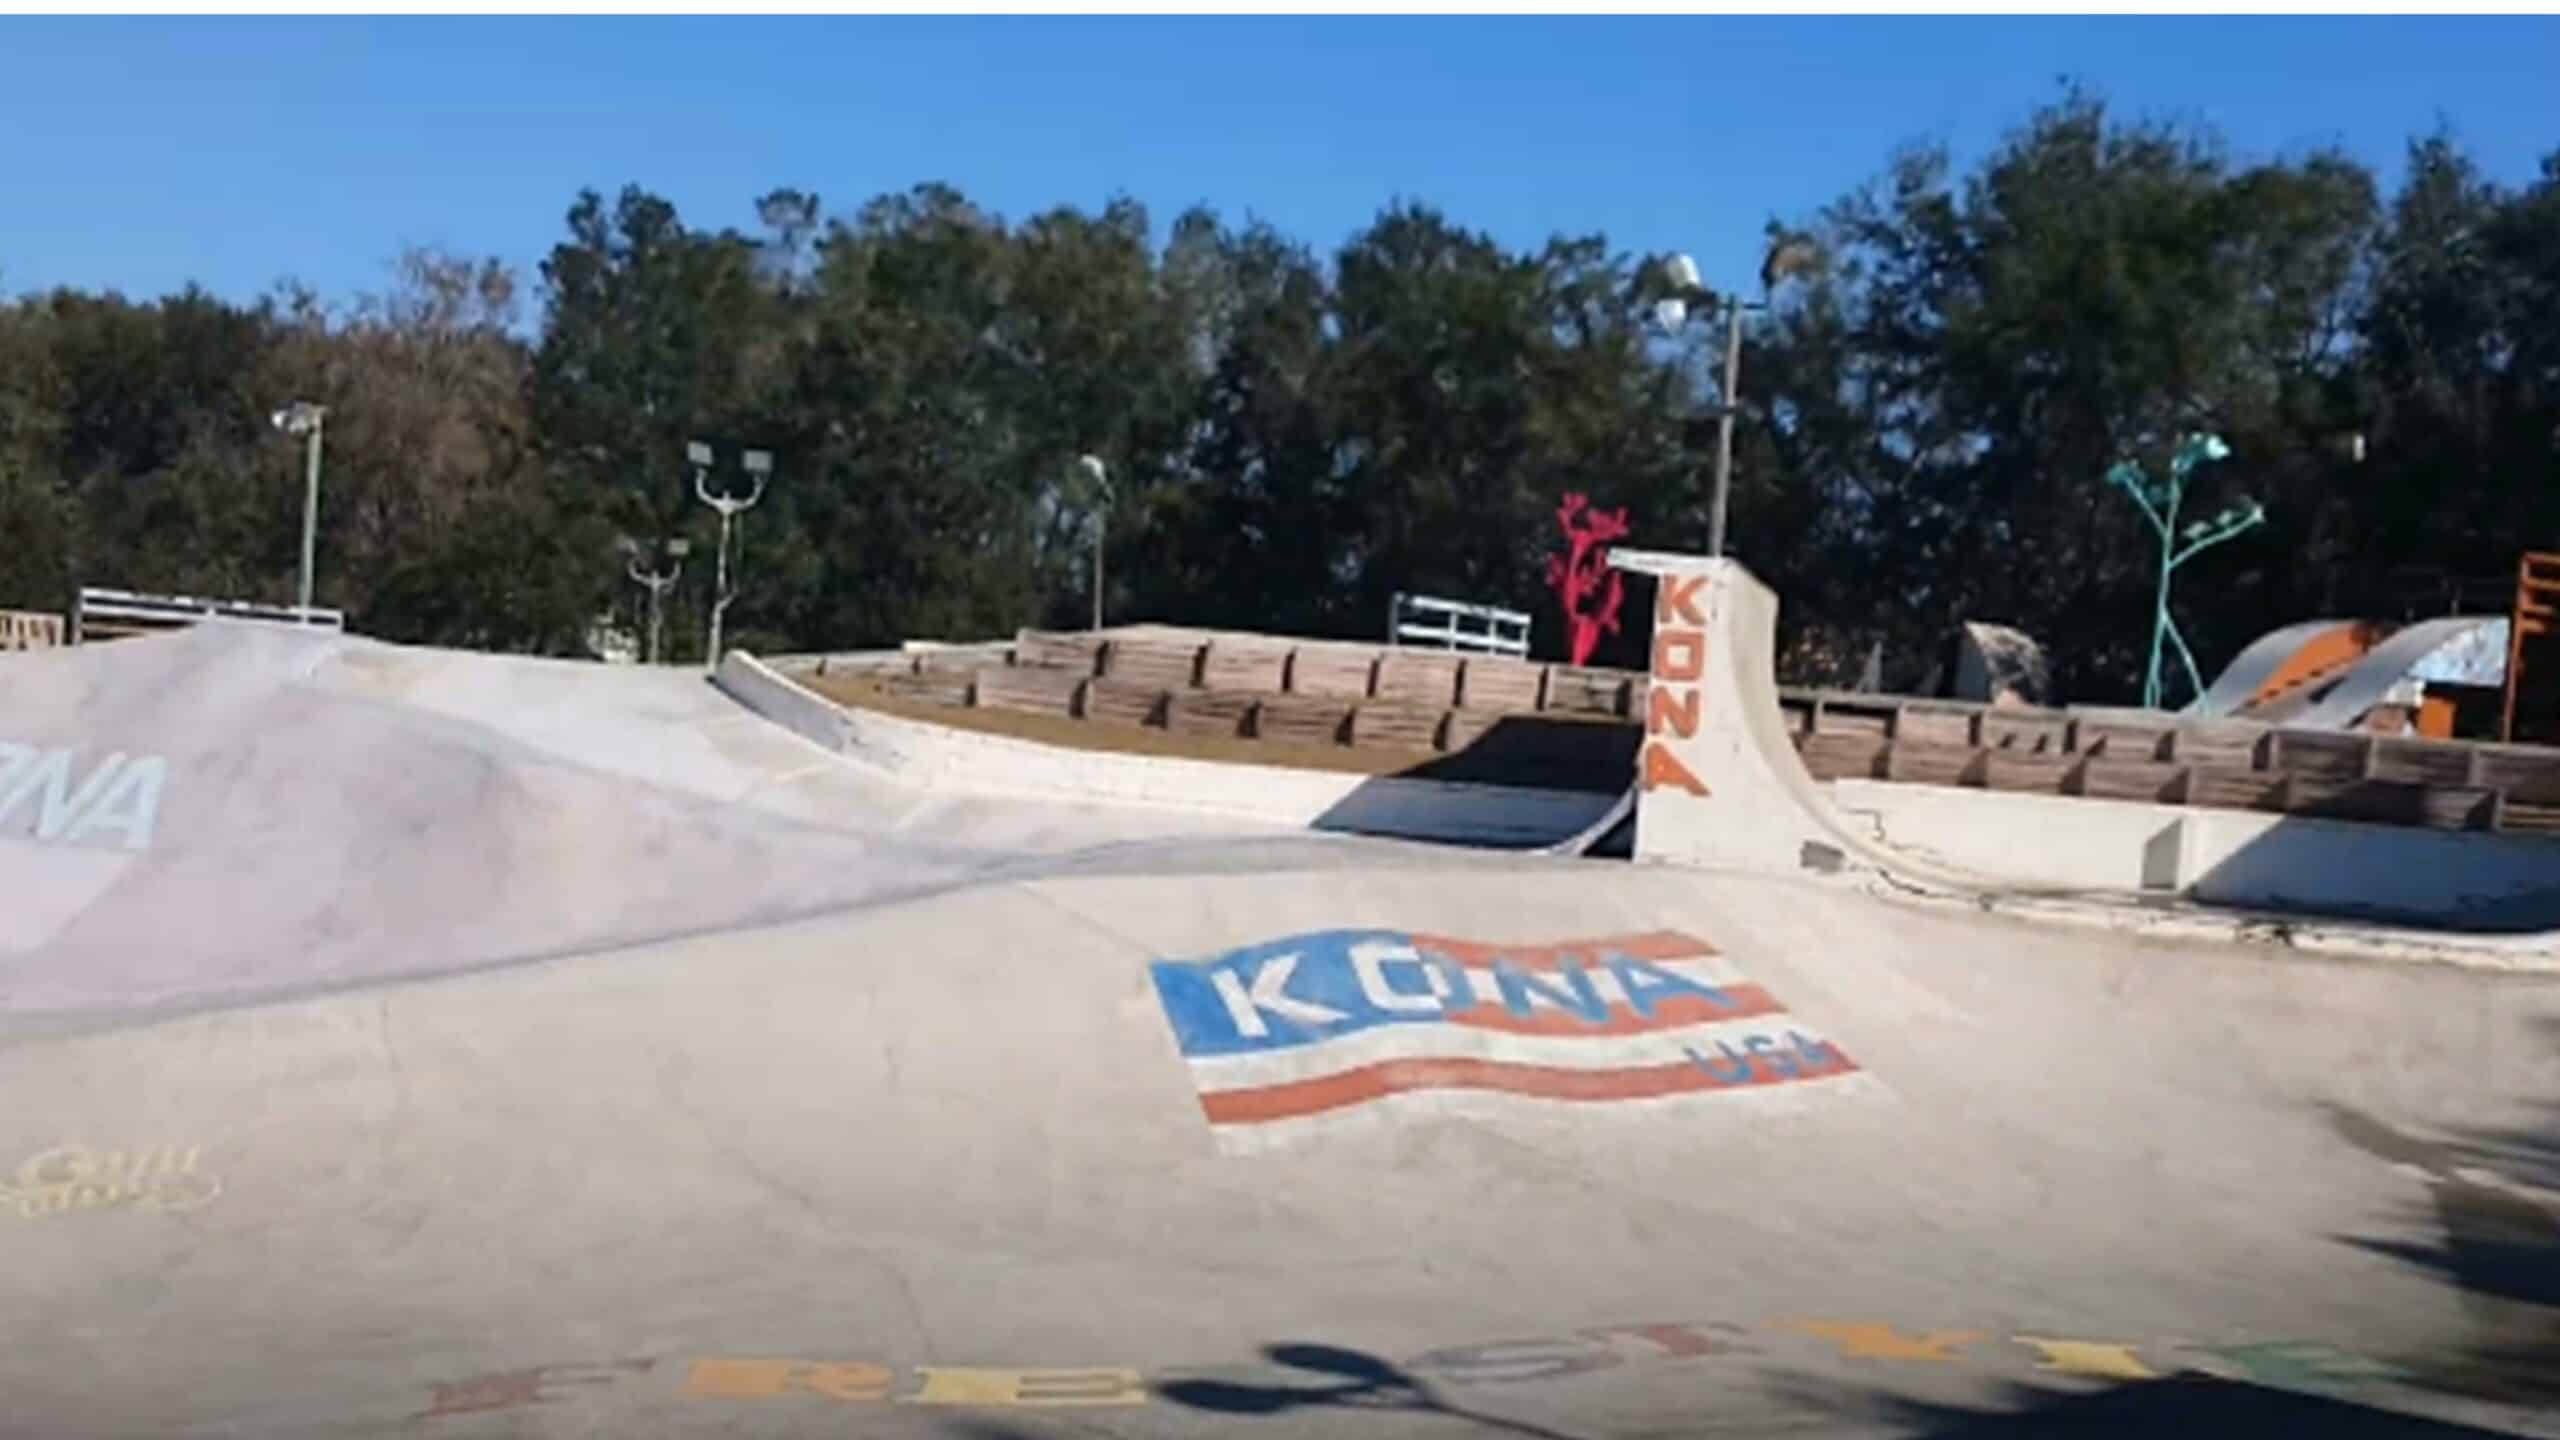 Kona skatepark USA is a public skateboarding park